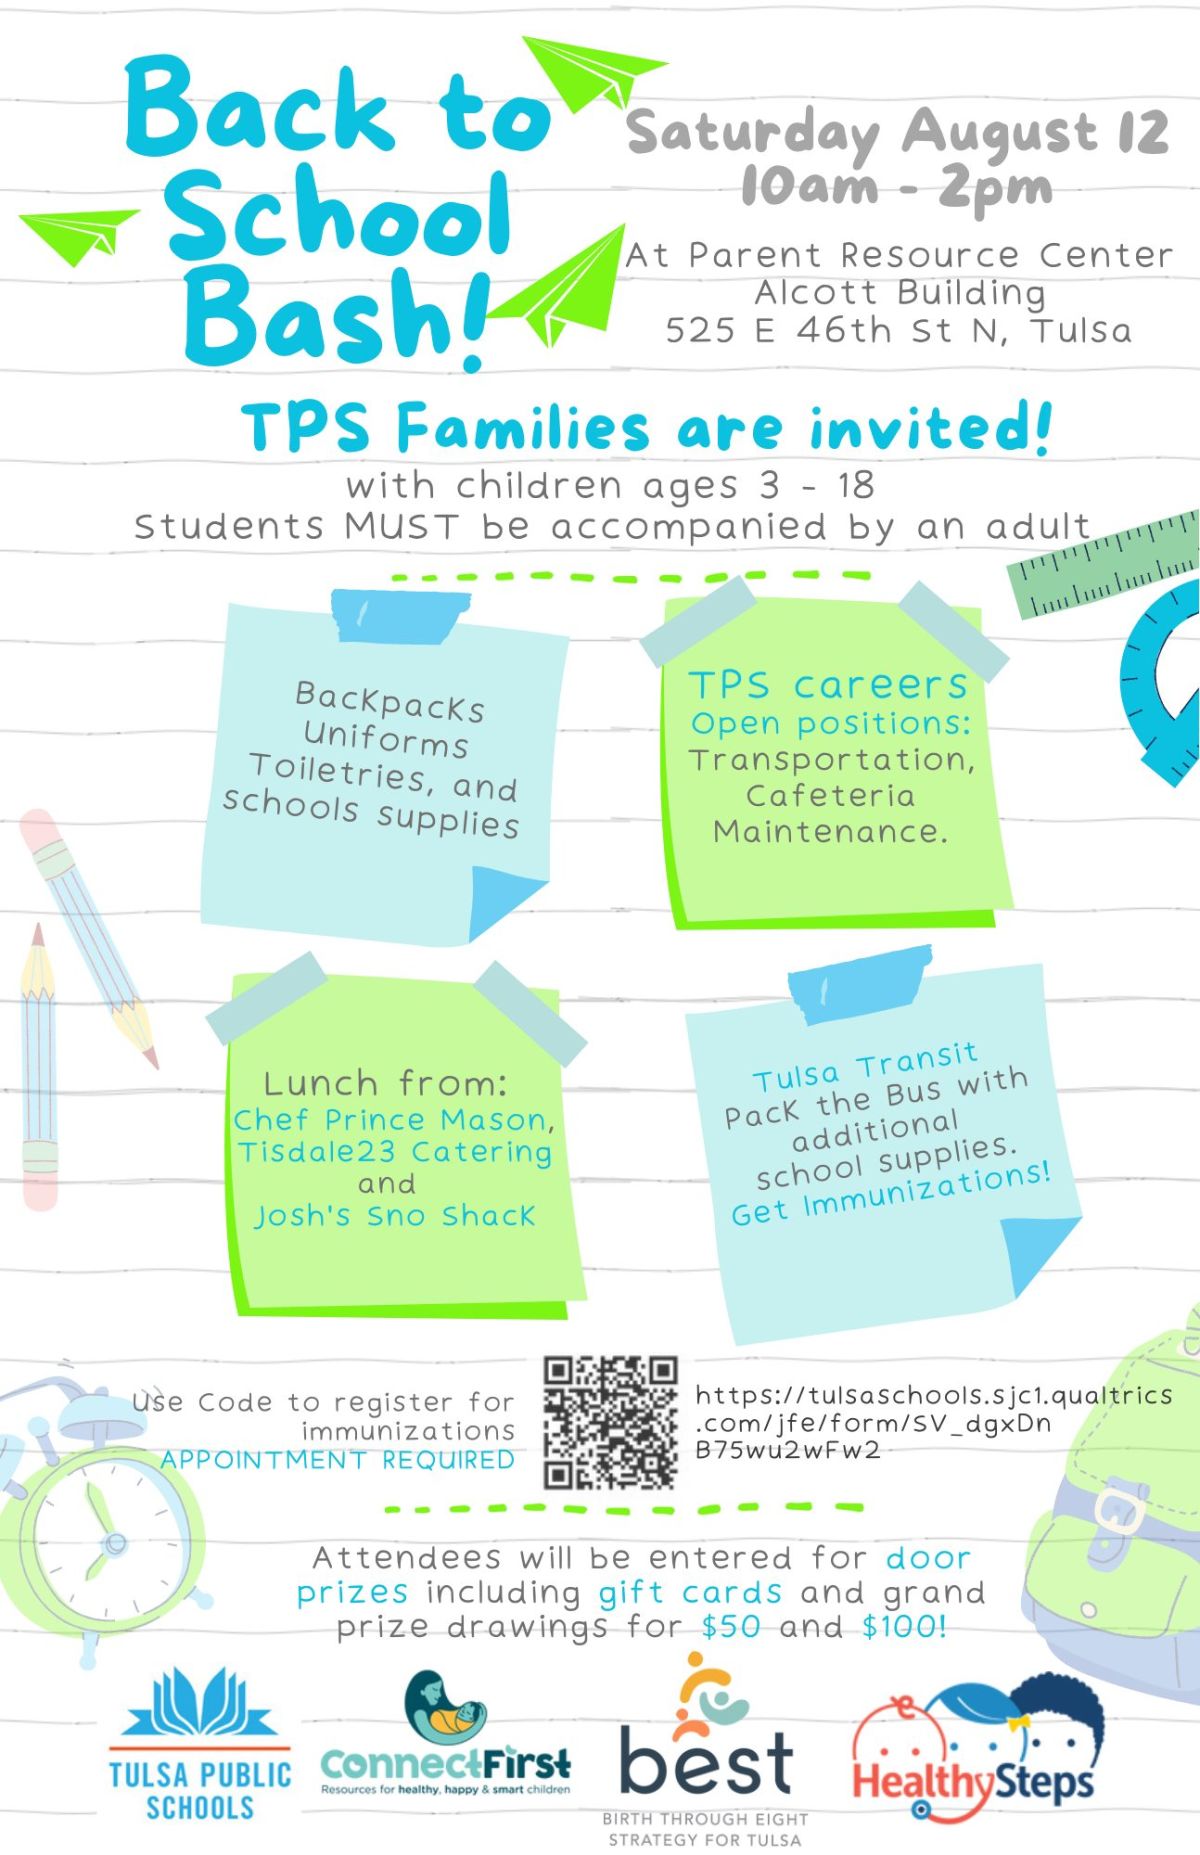 TPS announces back-to-school dates